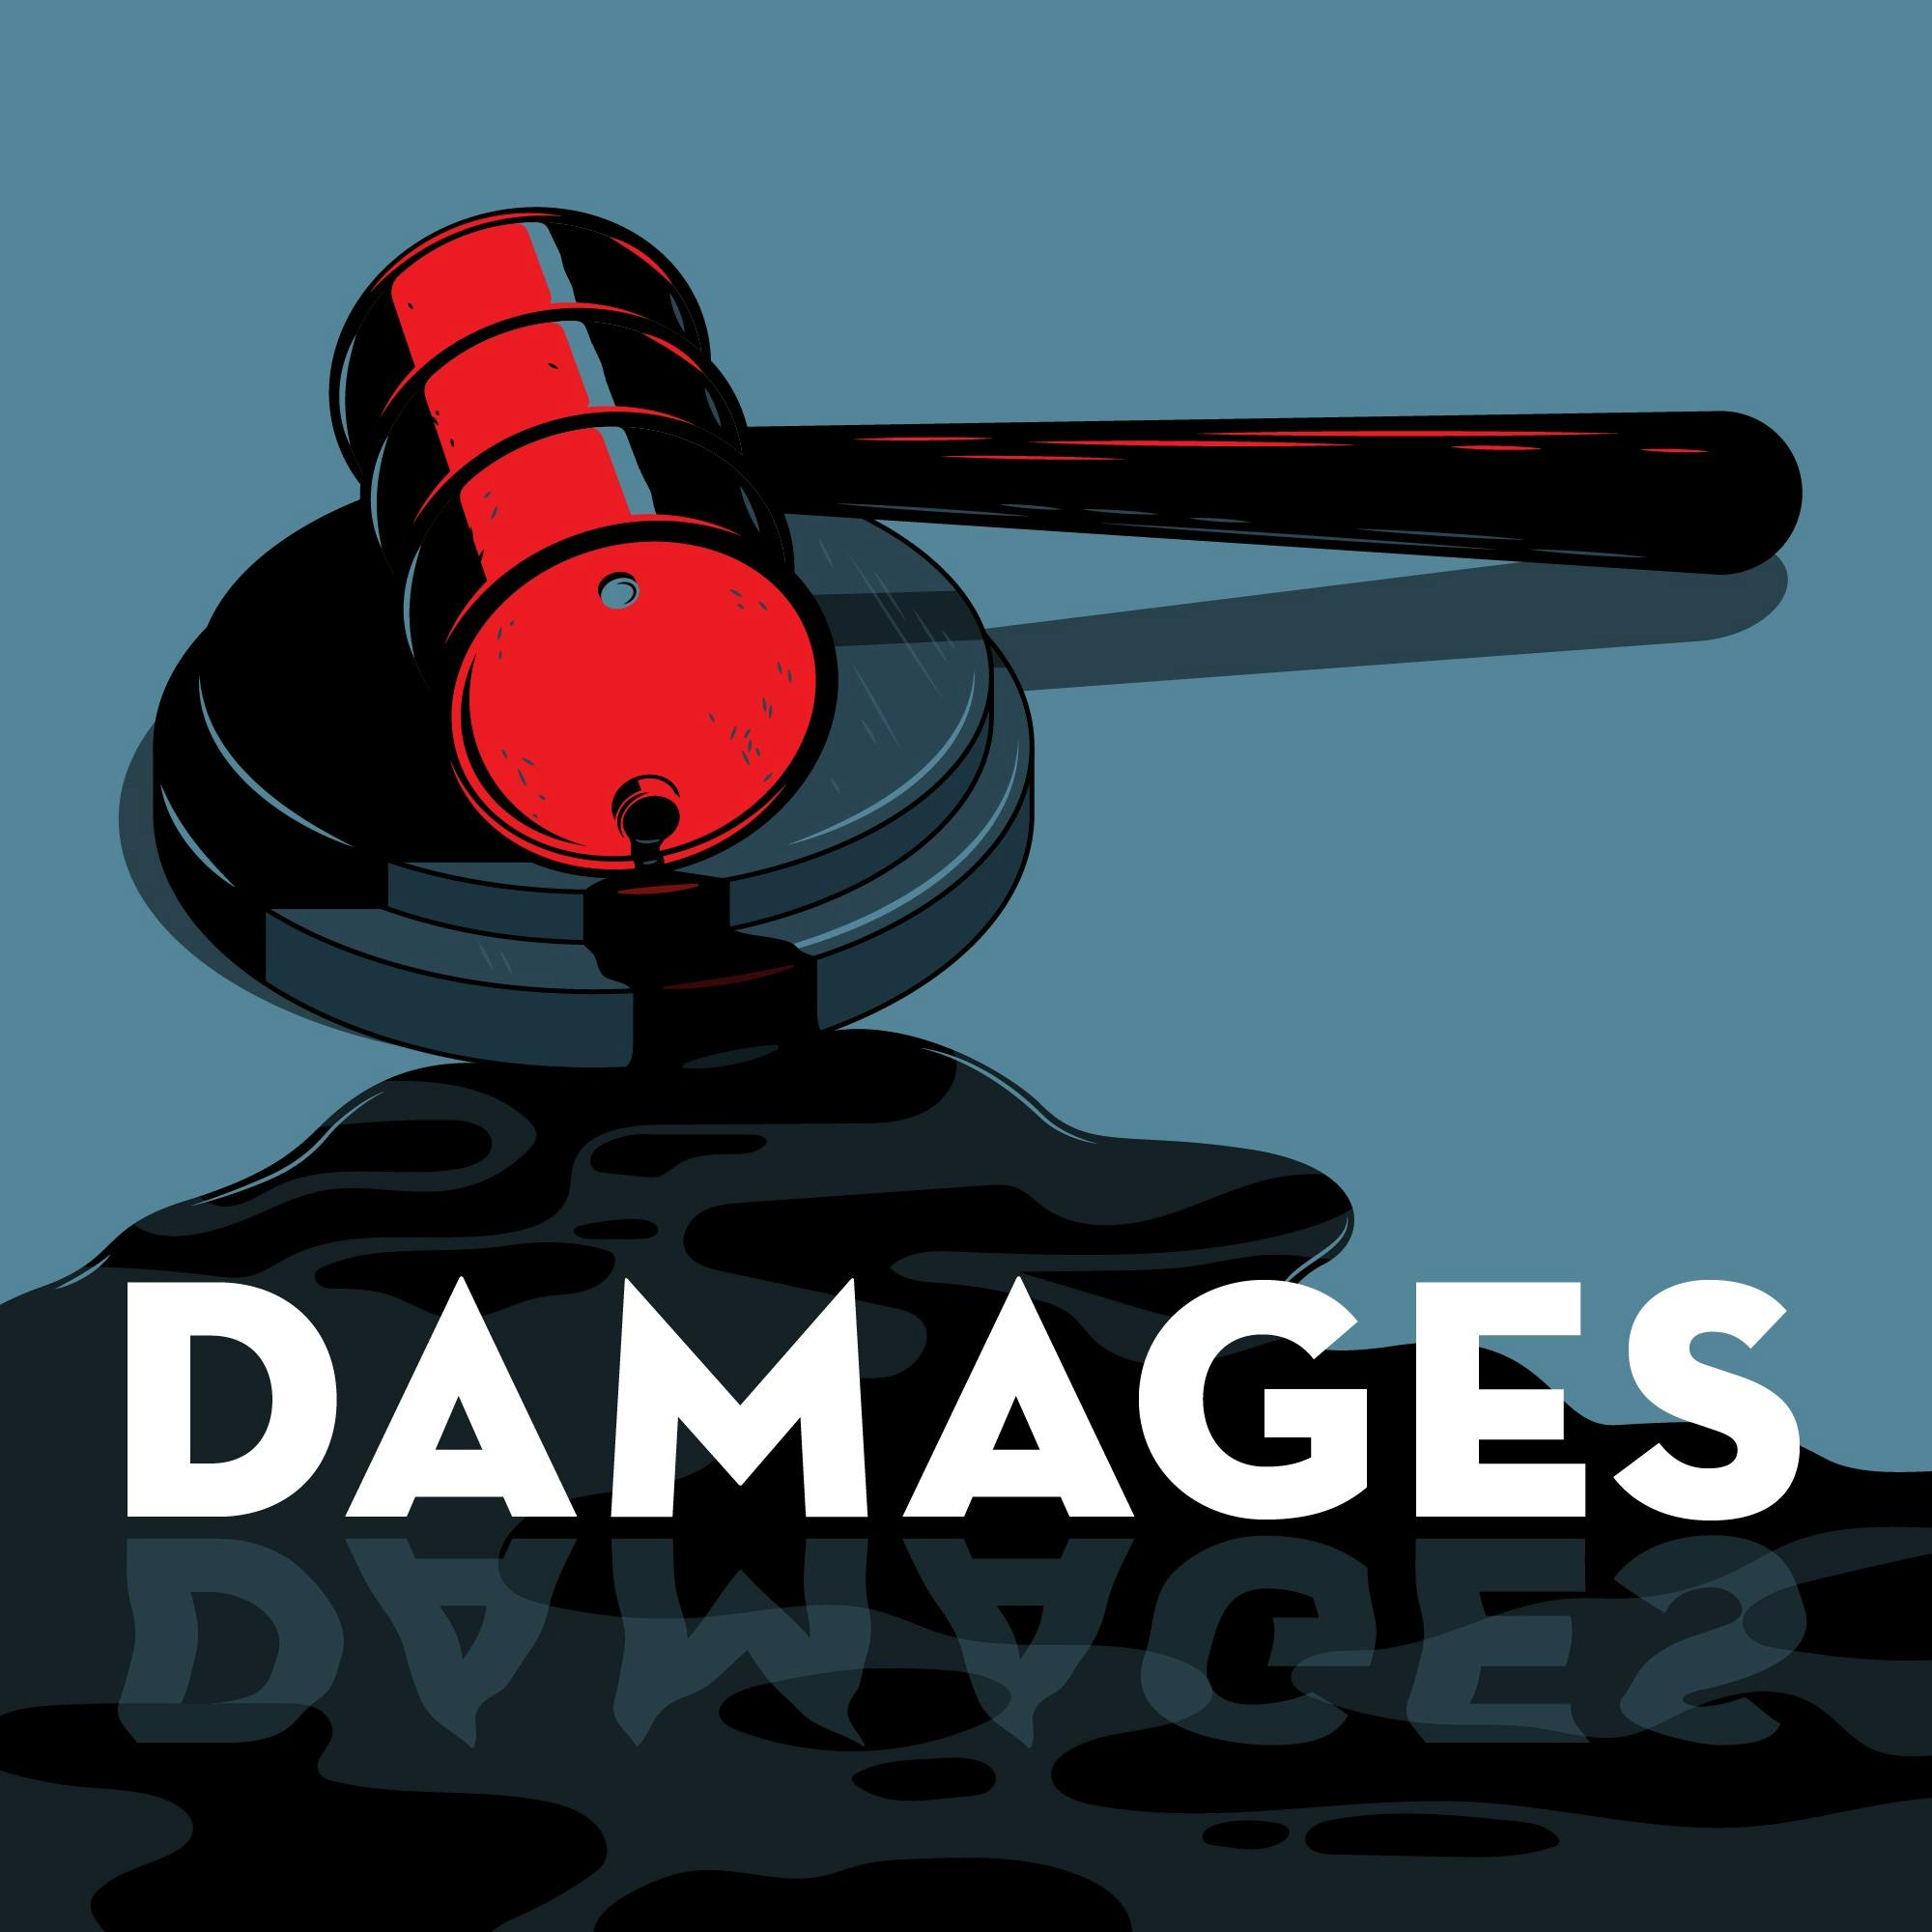 Damages podcast show image